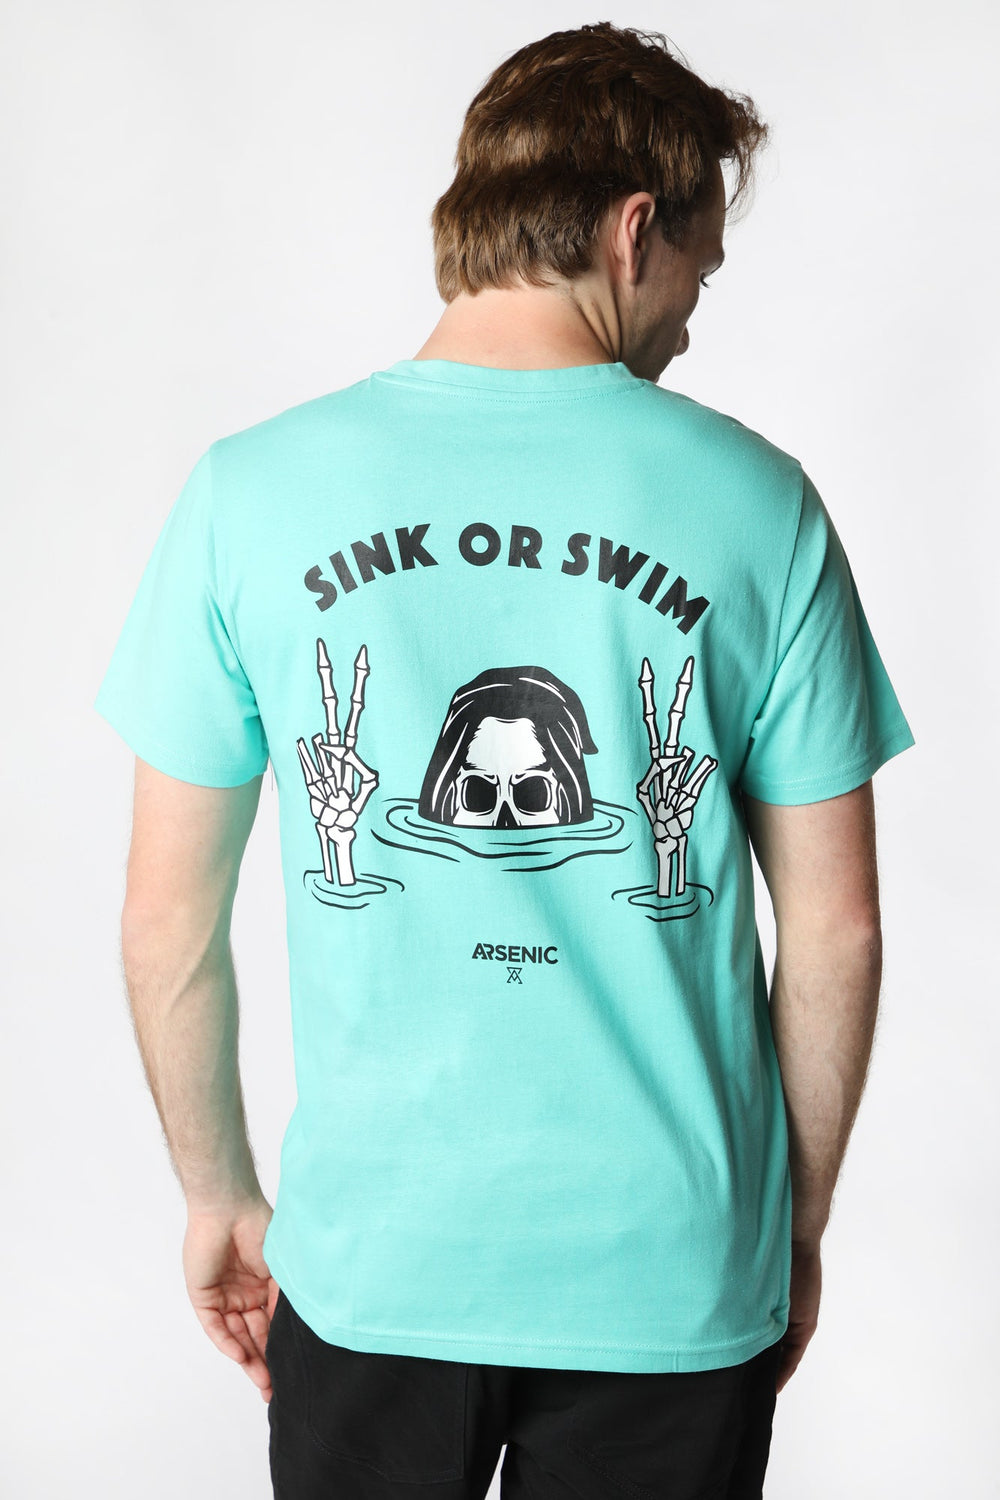 T-Shirt Imprimé Sink Or Swim Arsenic Homme Turquoise